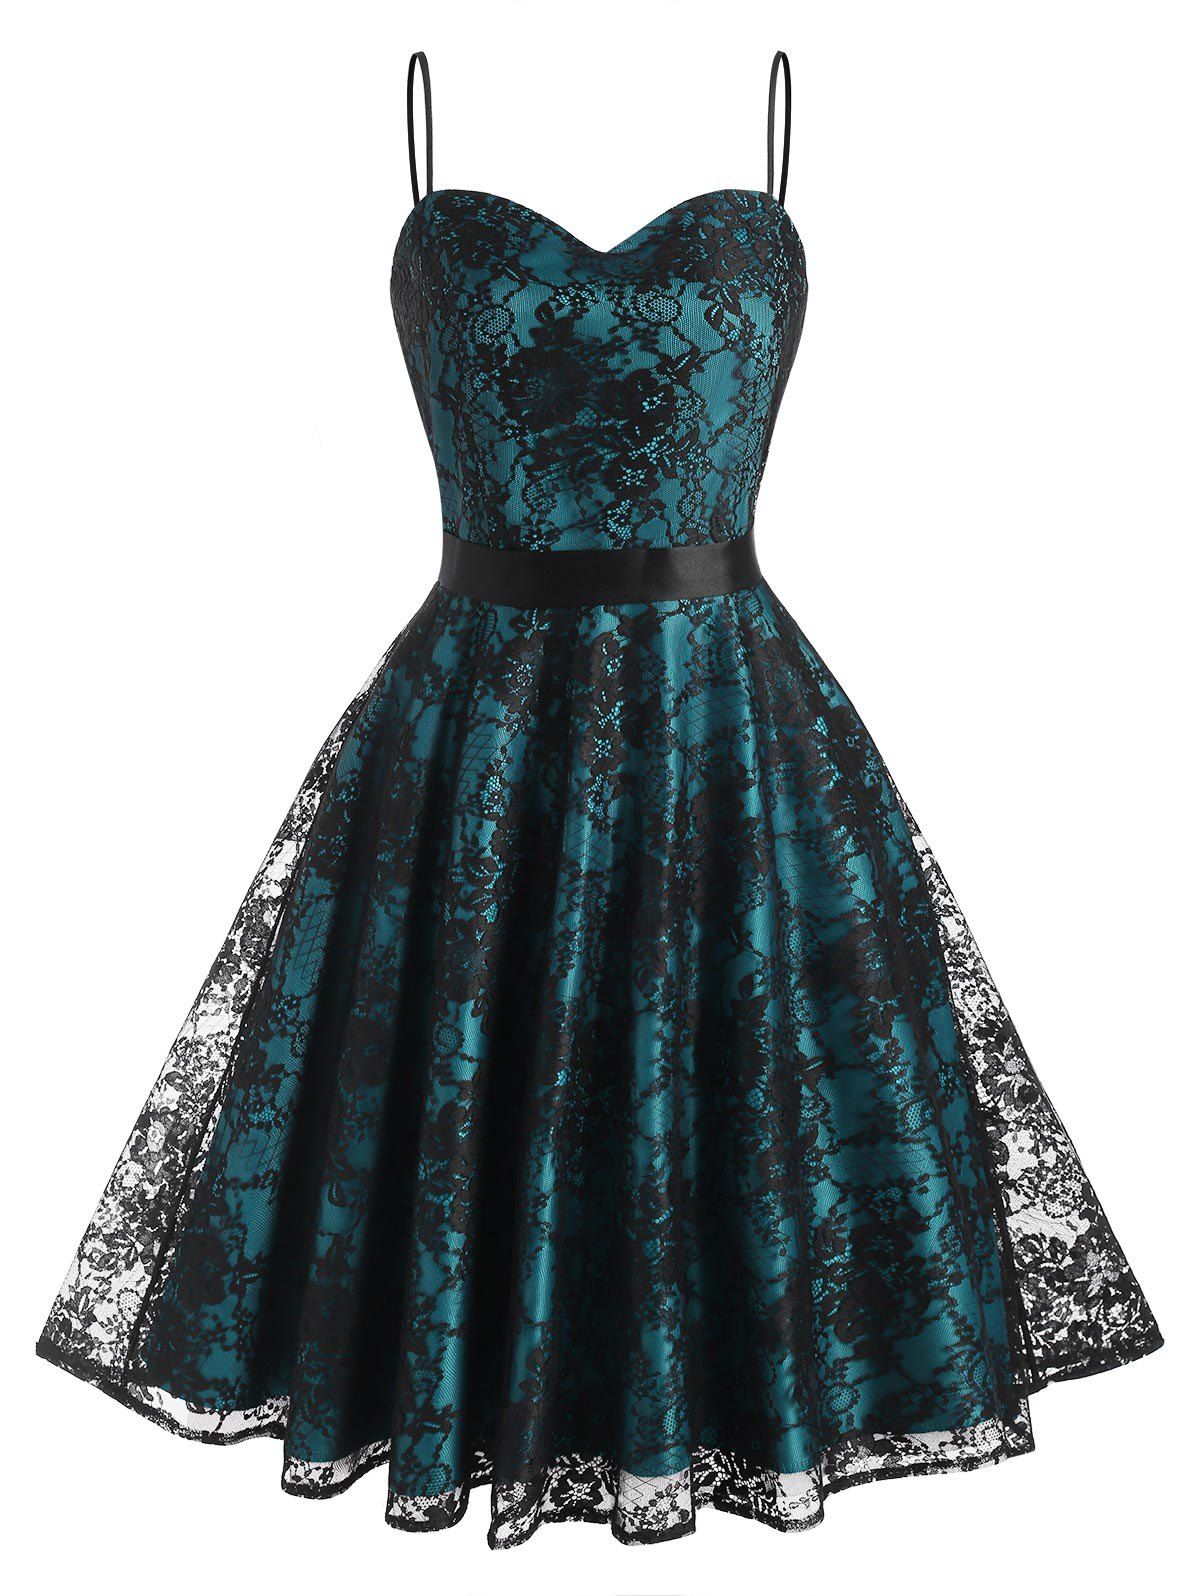 Summer Back Zipper Cami Lace Party Dress - BLUE XL